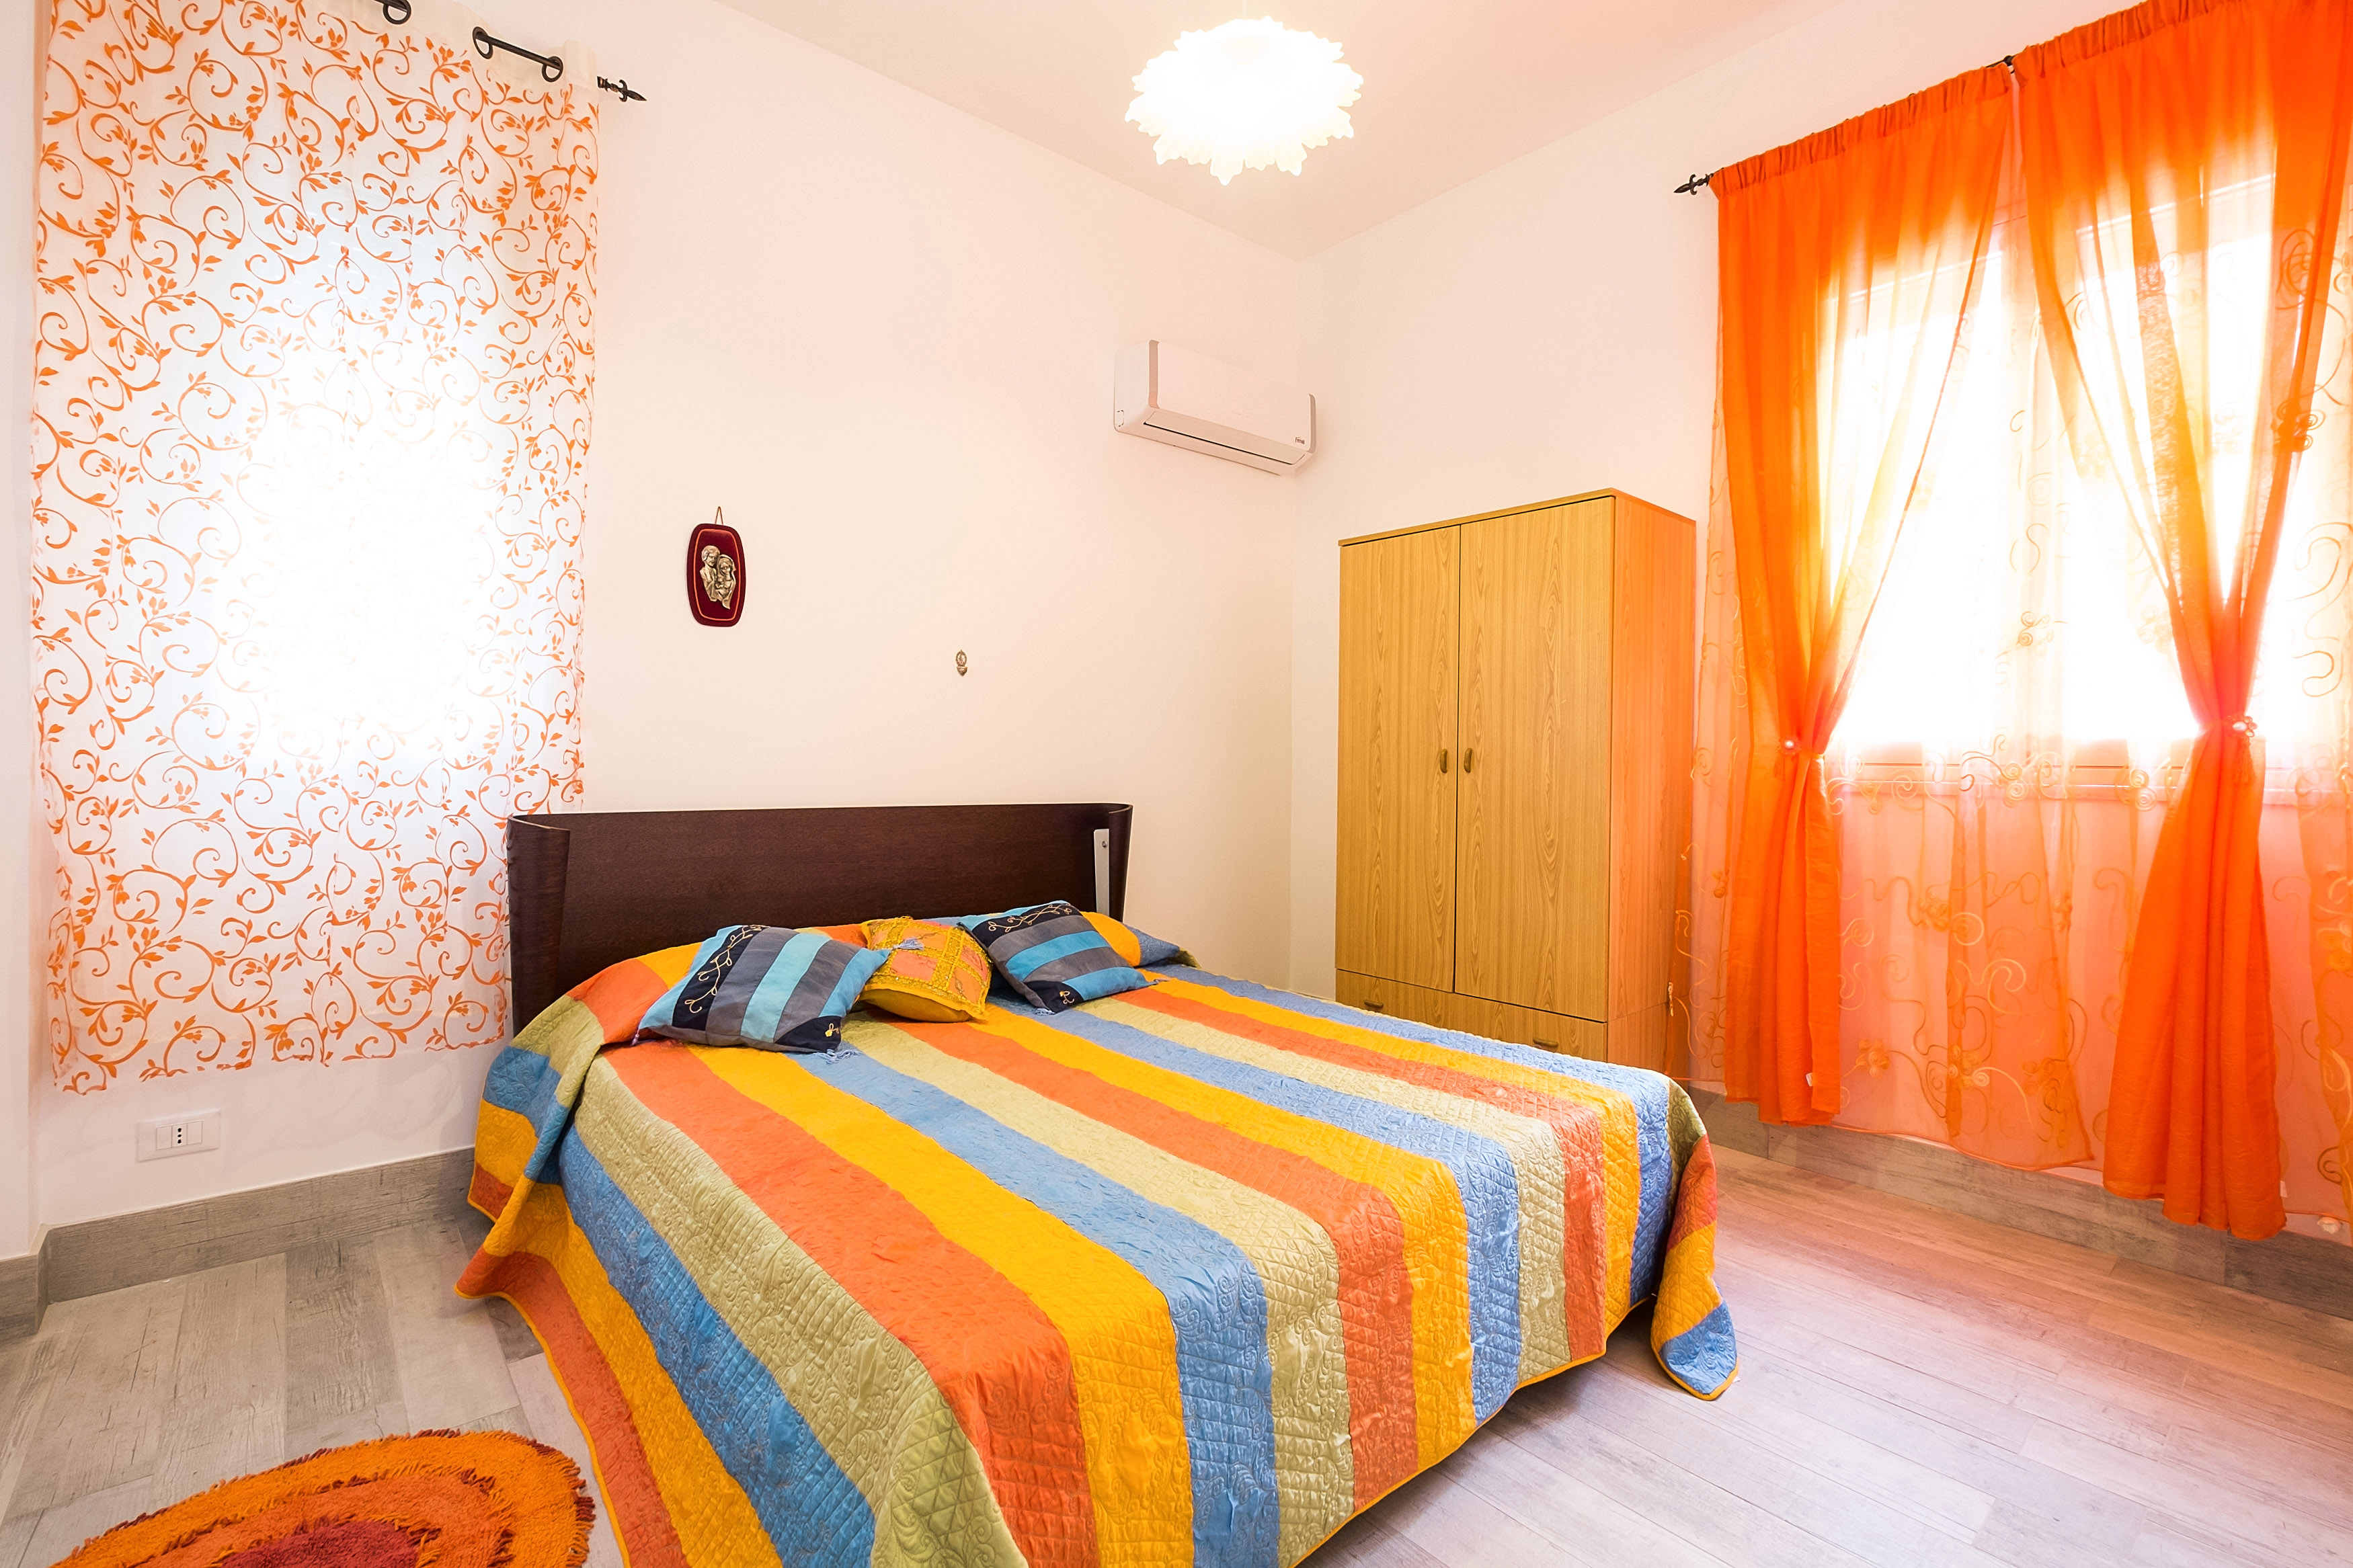 vb-Orange-Master-bedroom